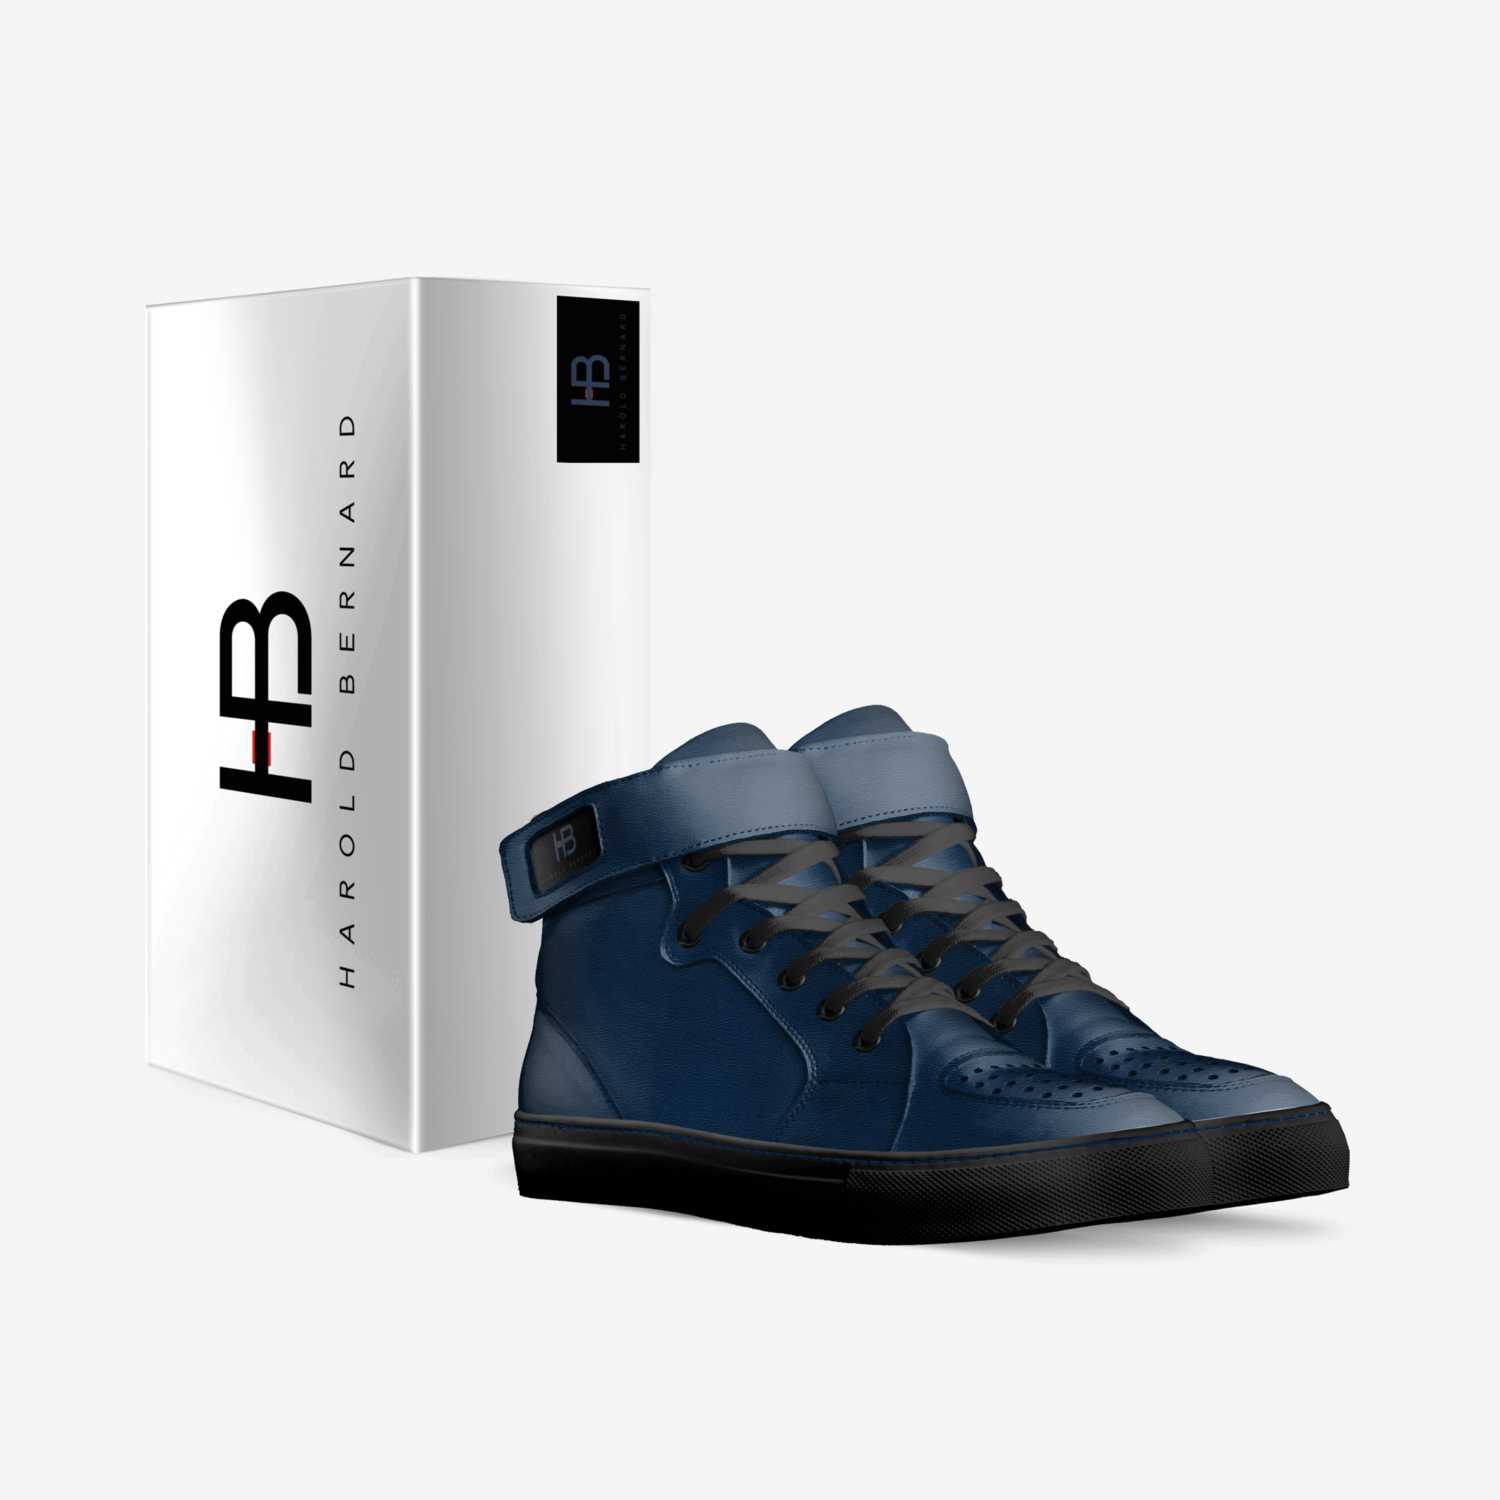 Mansa (blue) custom made in Italy shoes by Nikki Makk | Box view